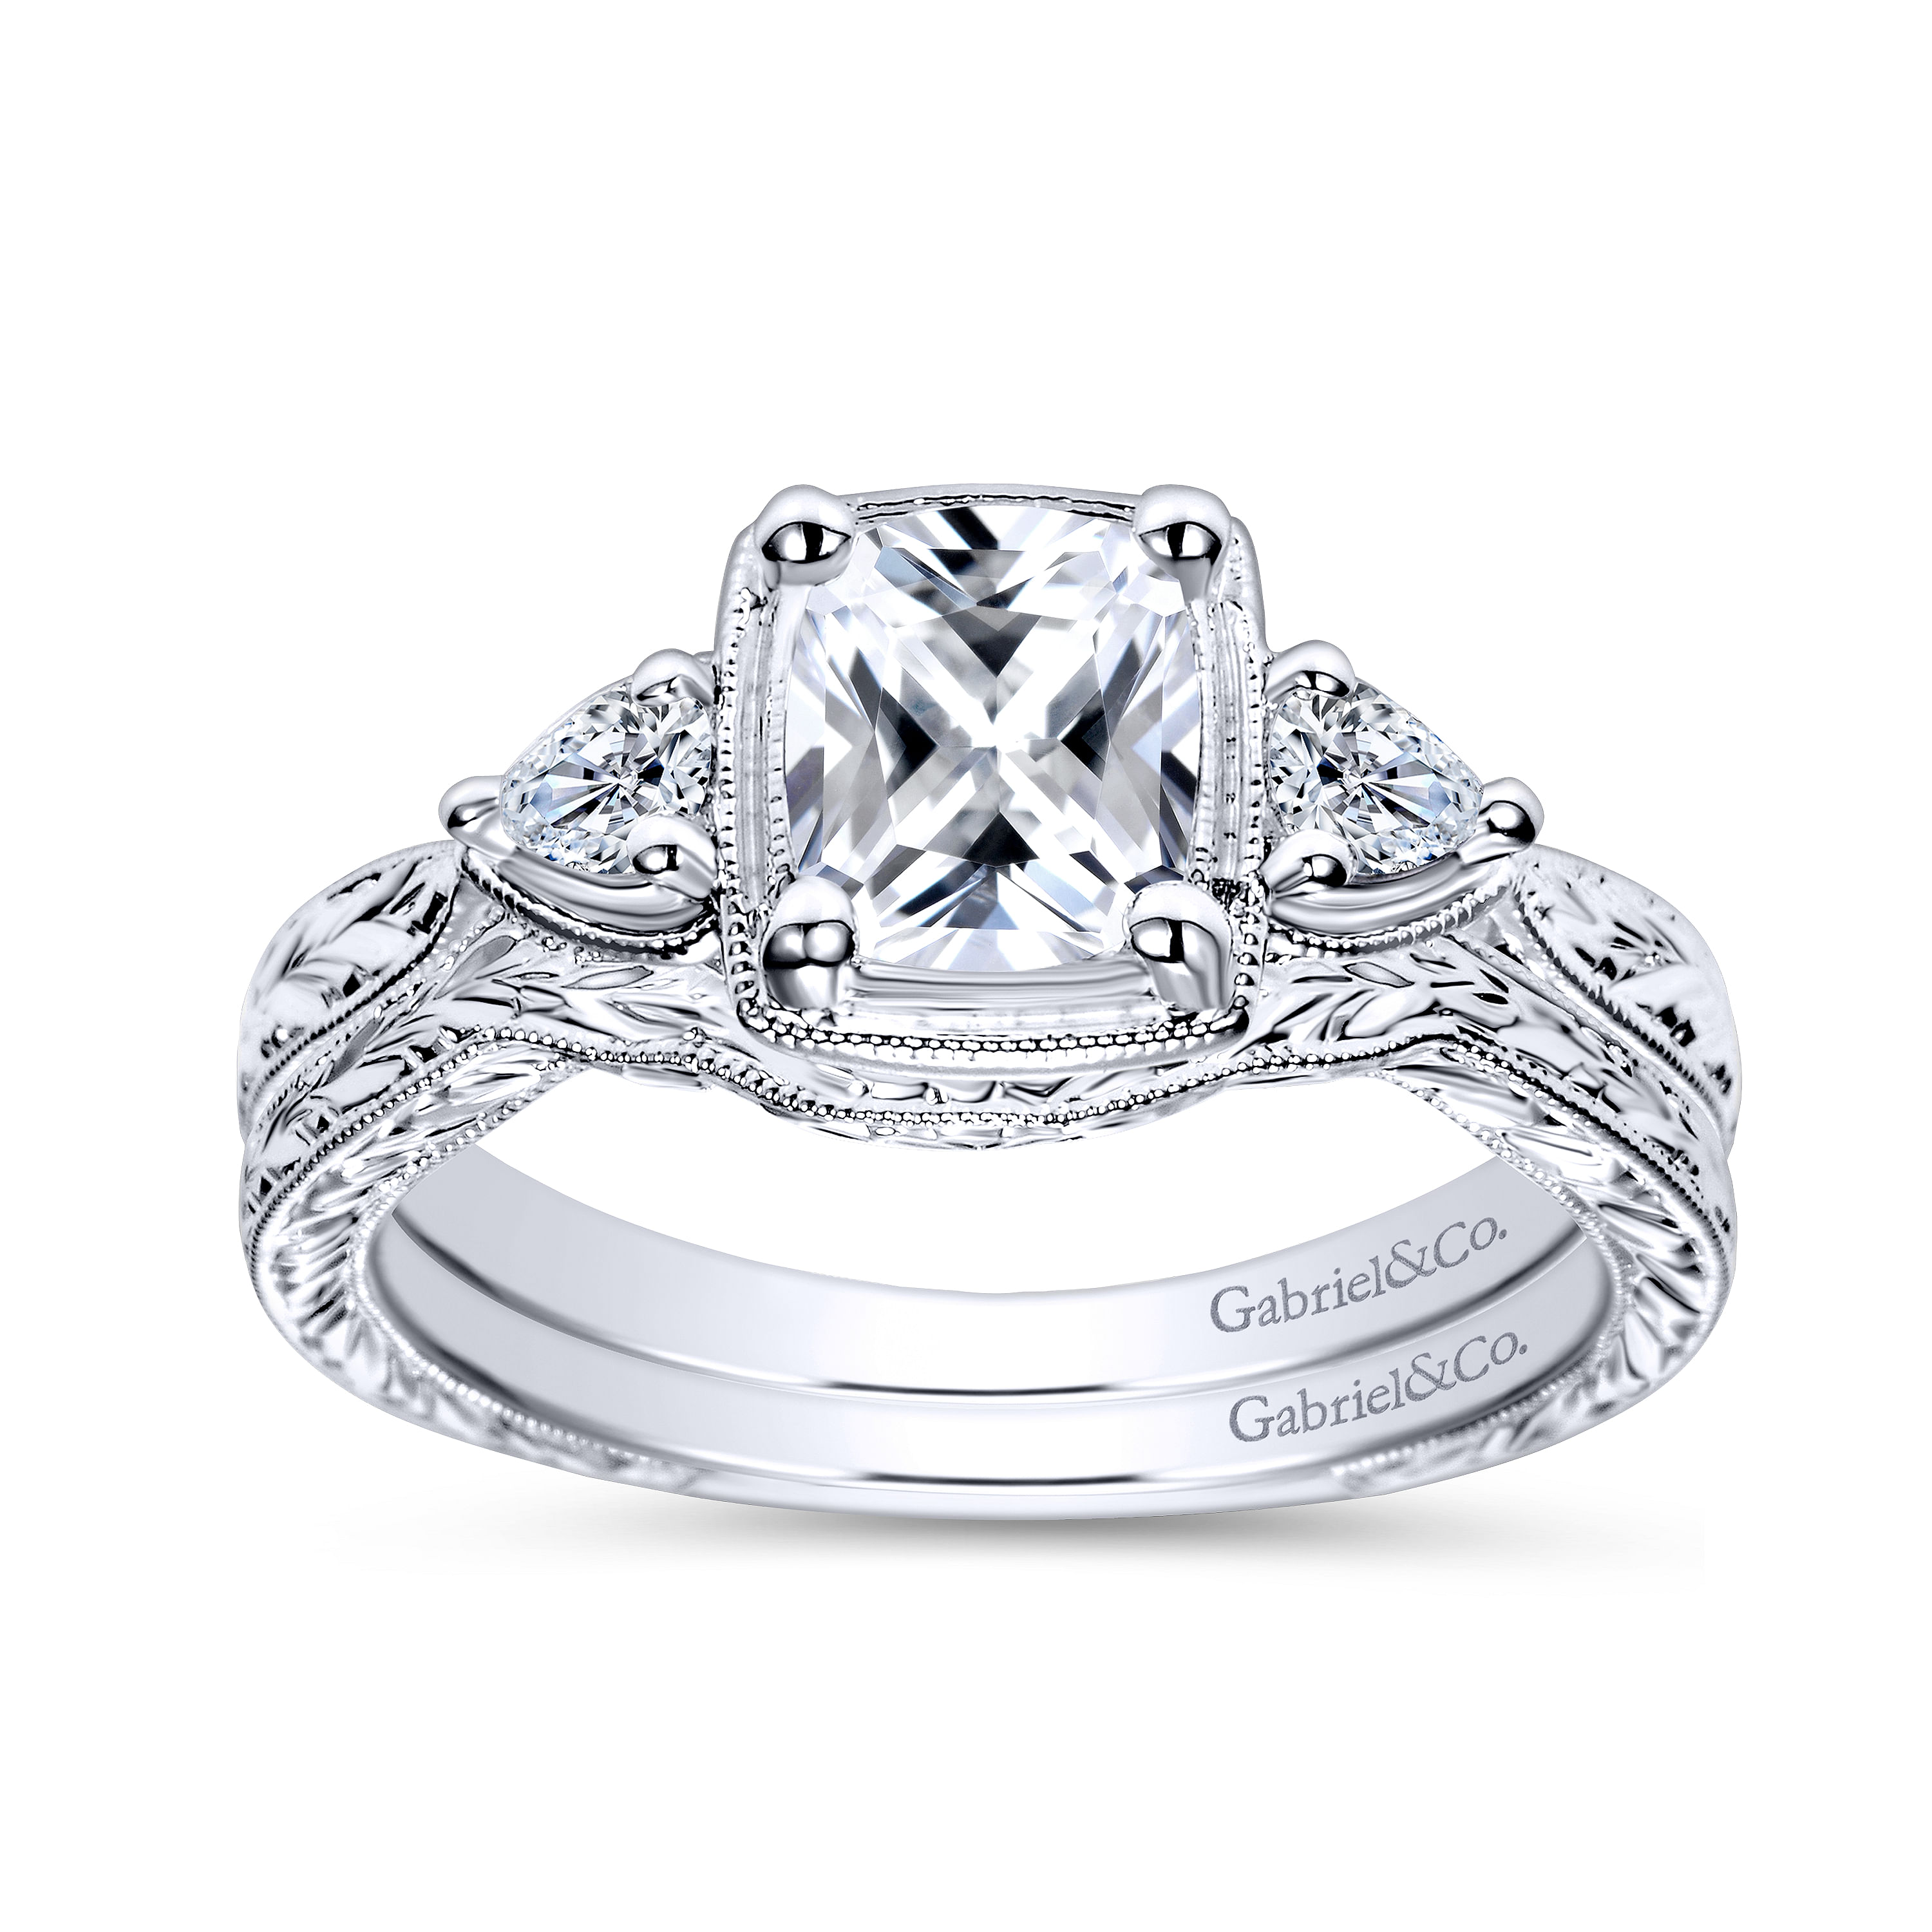 Vintage Inspired 14K White Gold Cushion Cut Three Stone Diamond Engagement Ring